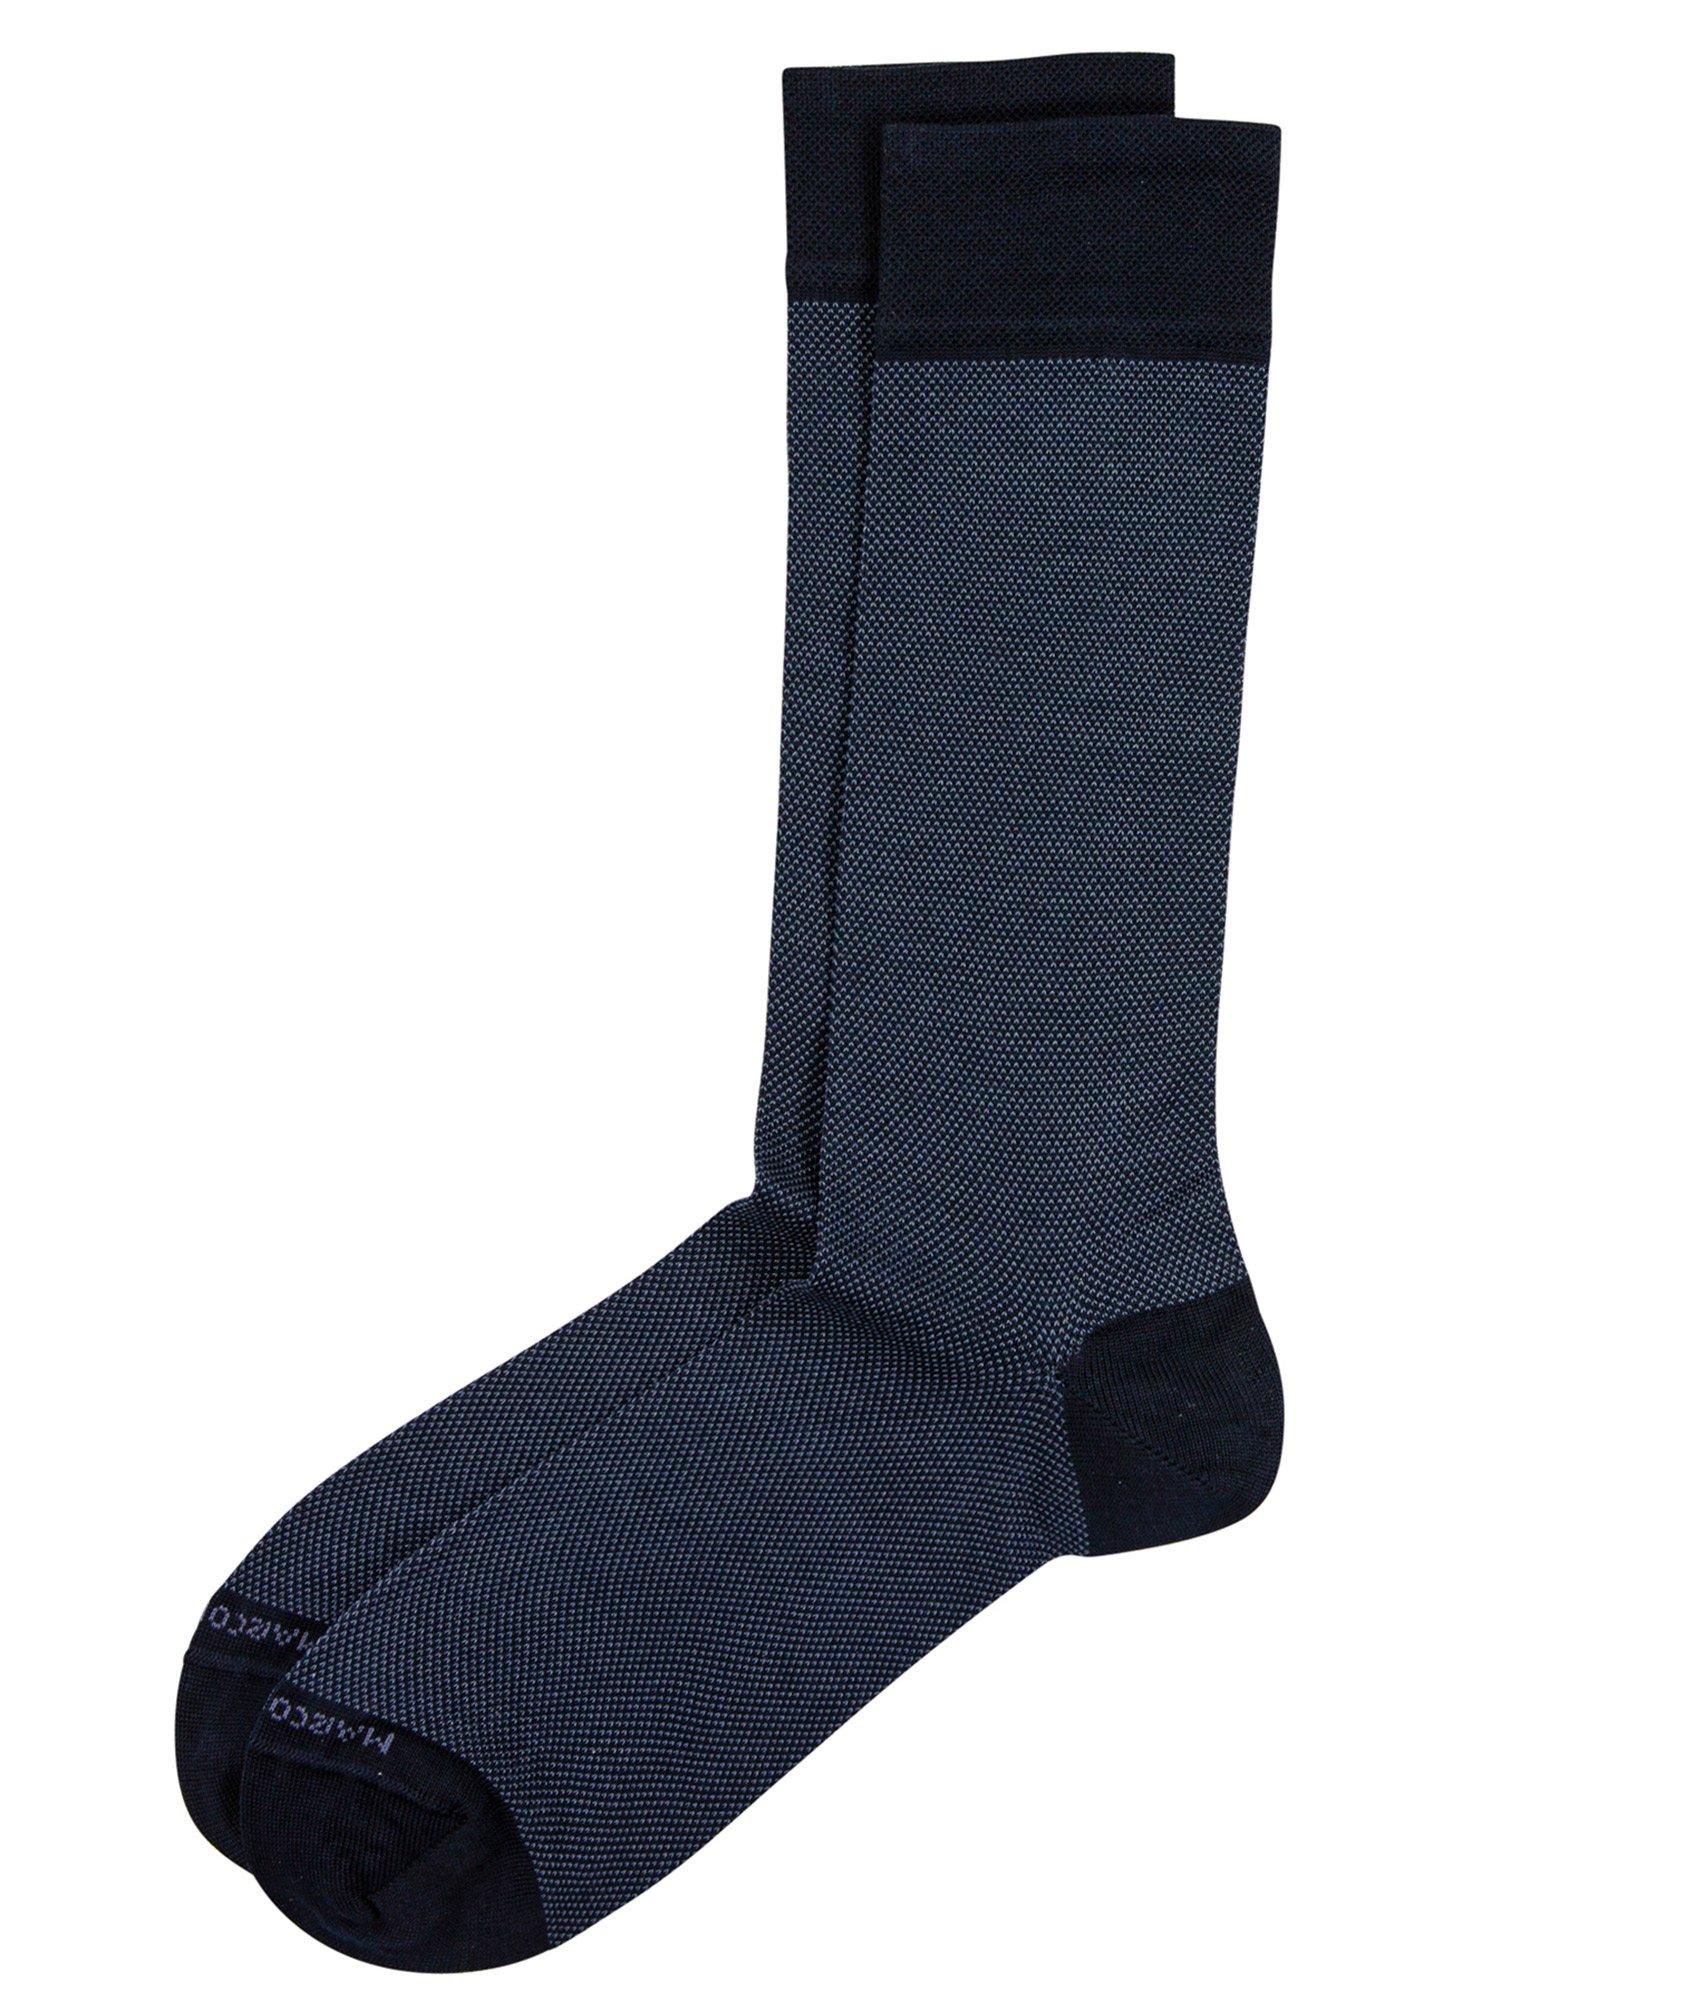 Textured Cotton-Blend Socks image 0